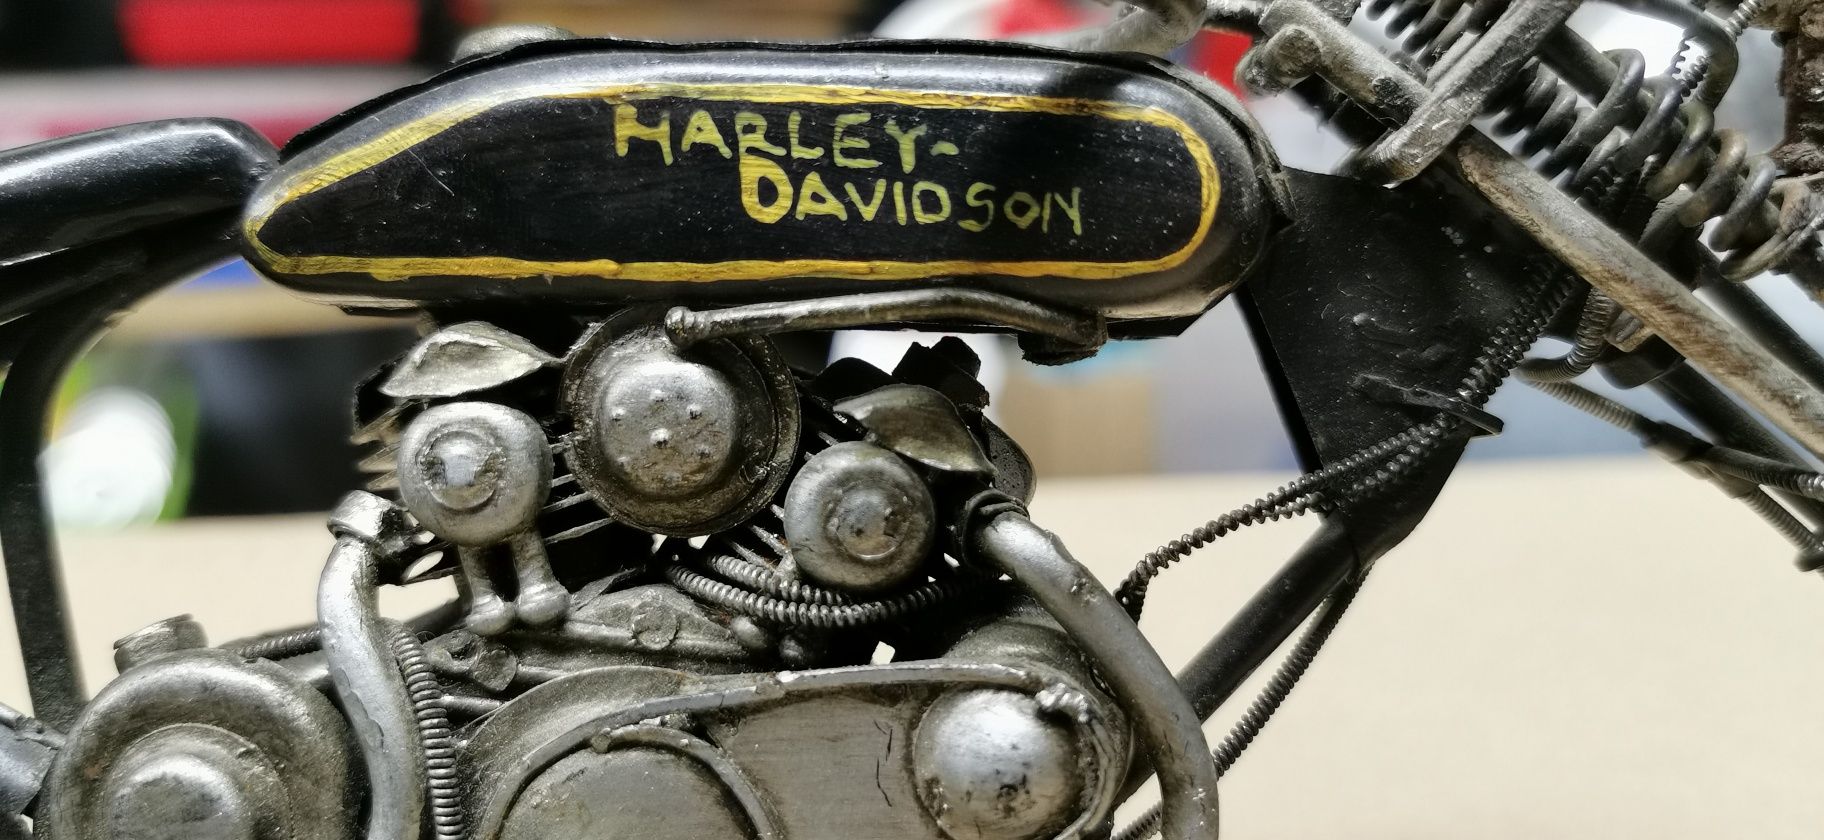 Model motor harley davidson